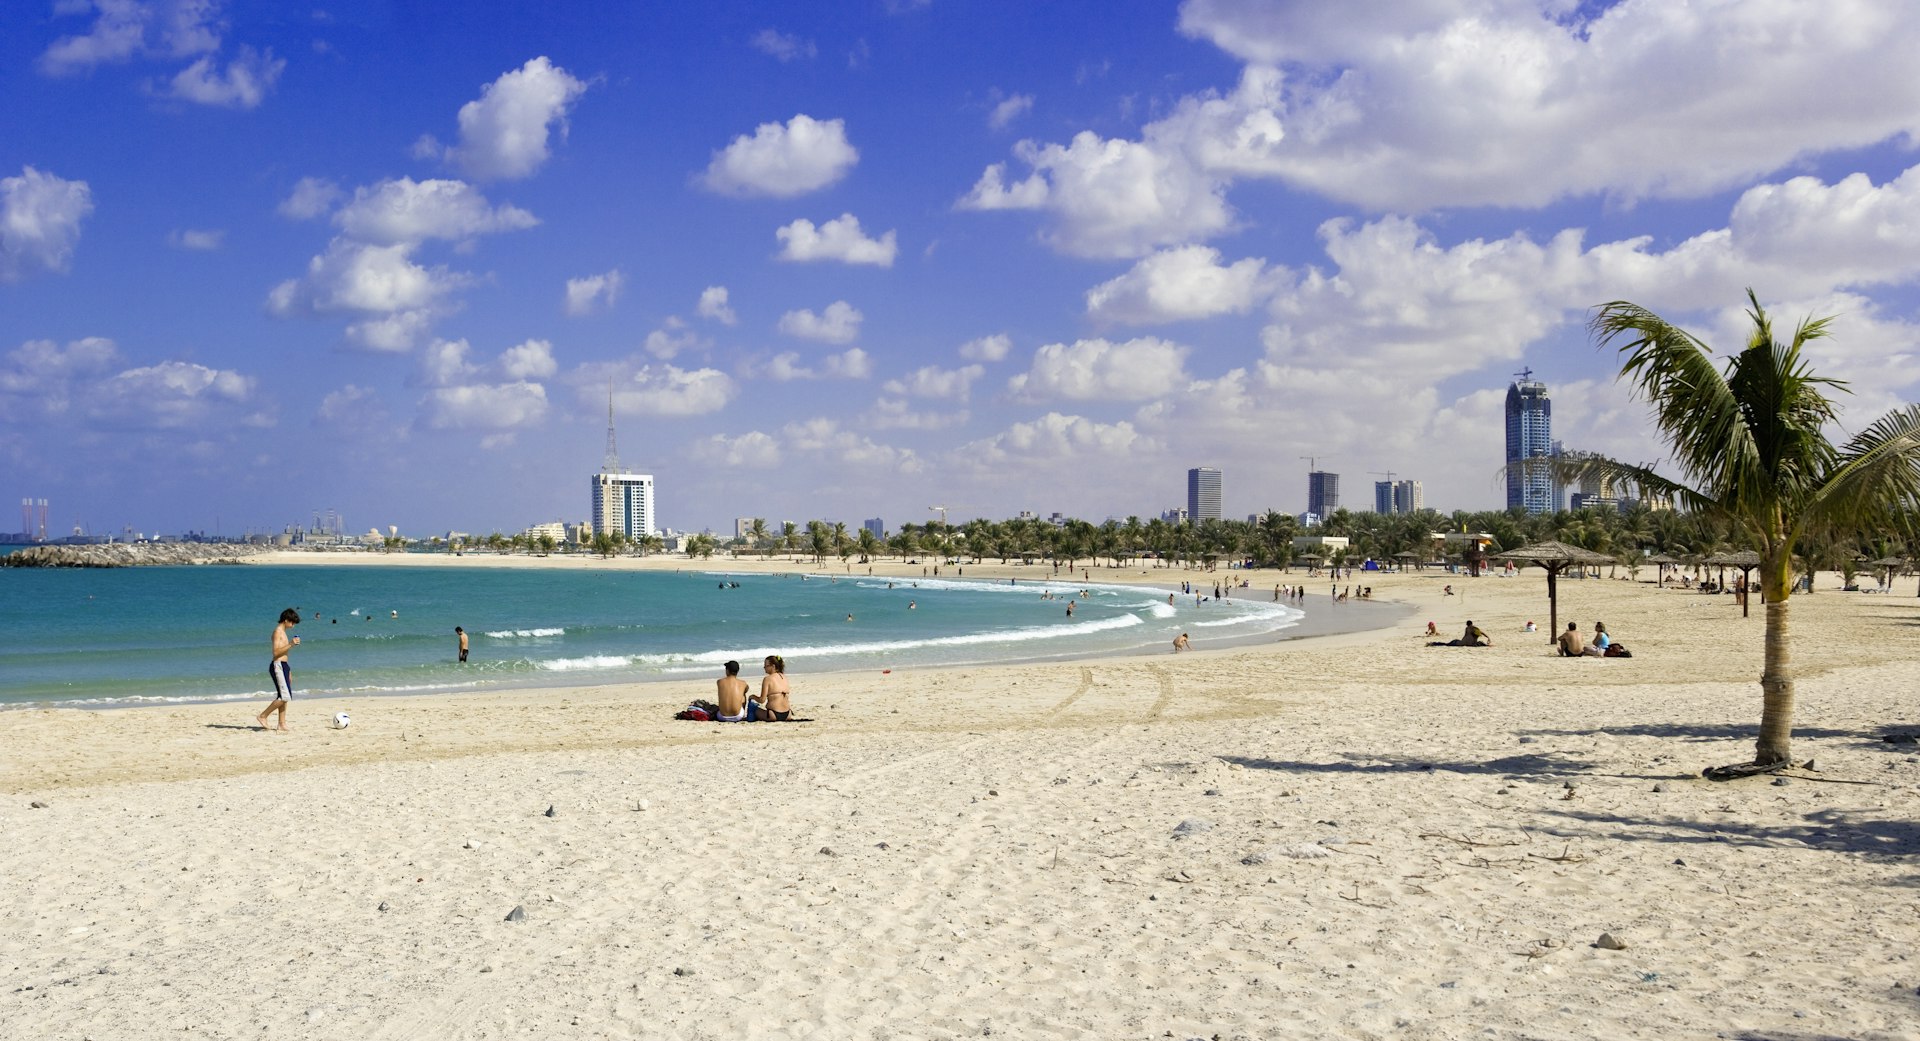 Visitors relaxing at Al Mamzar Beach Park in Dubai, United Arab Emirates